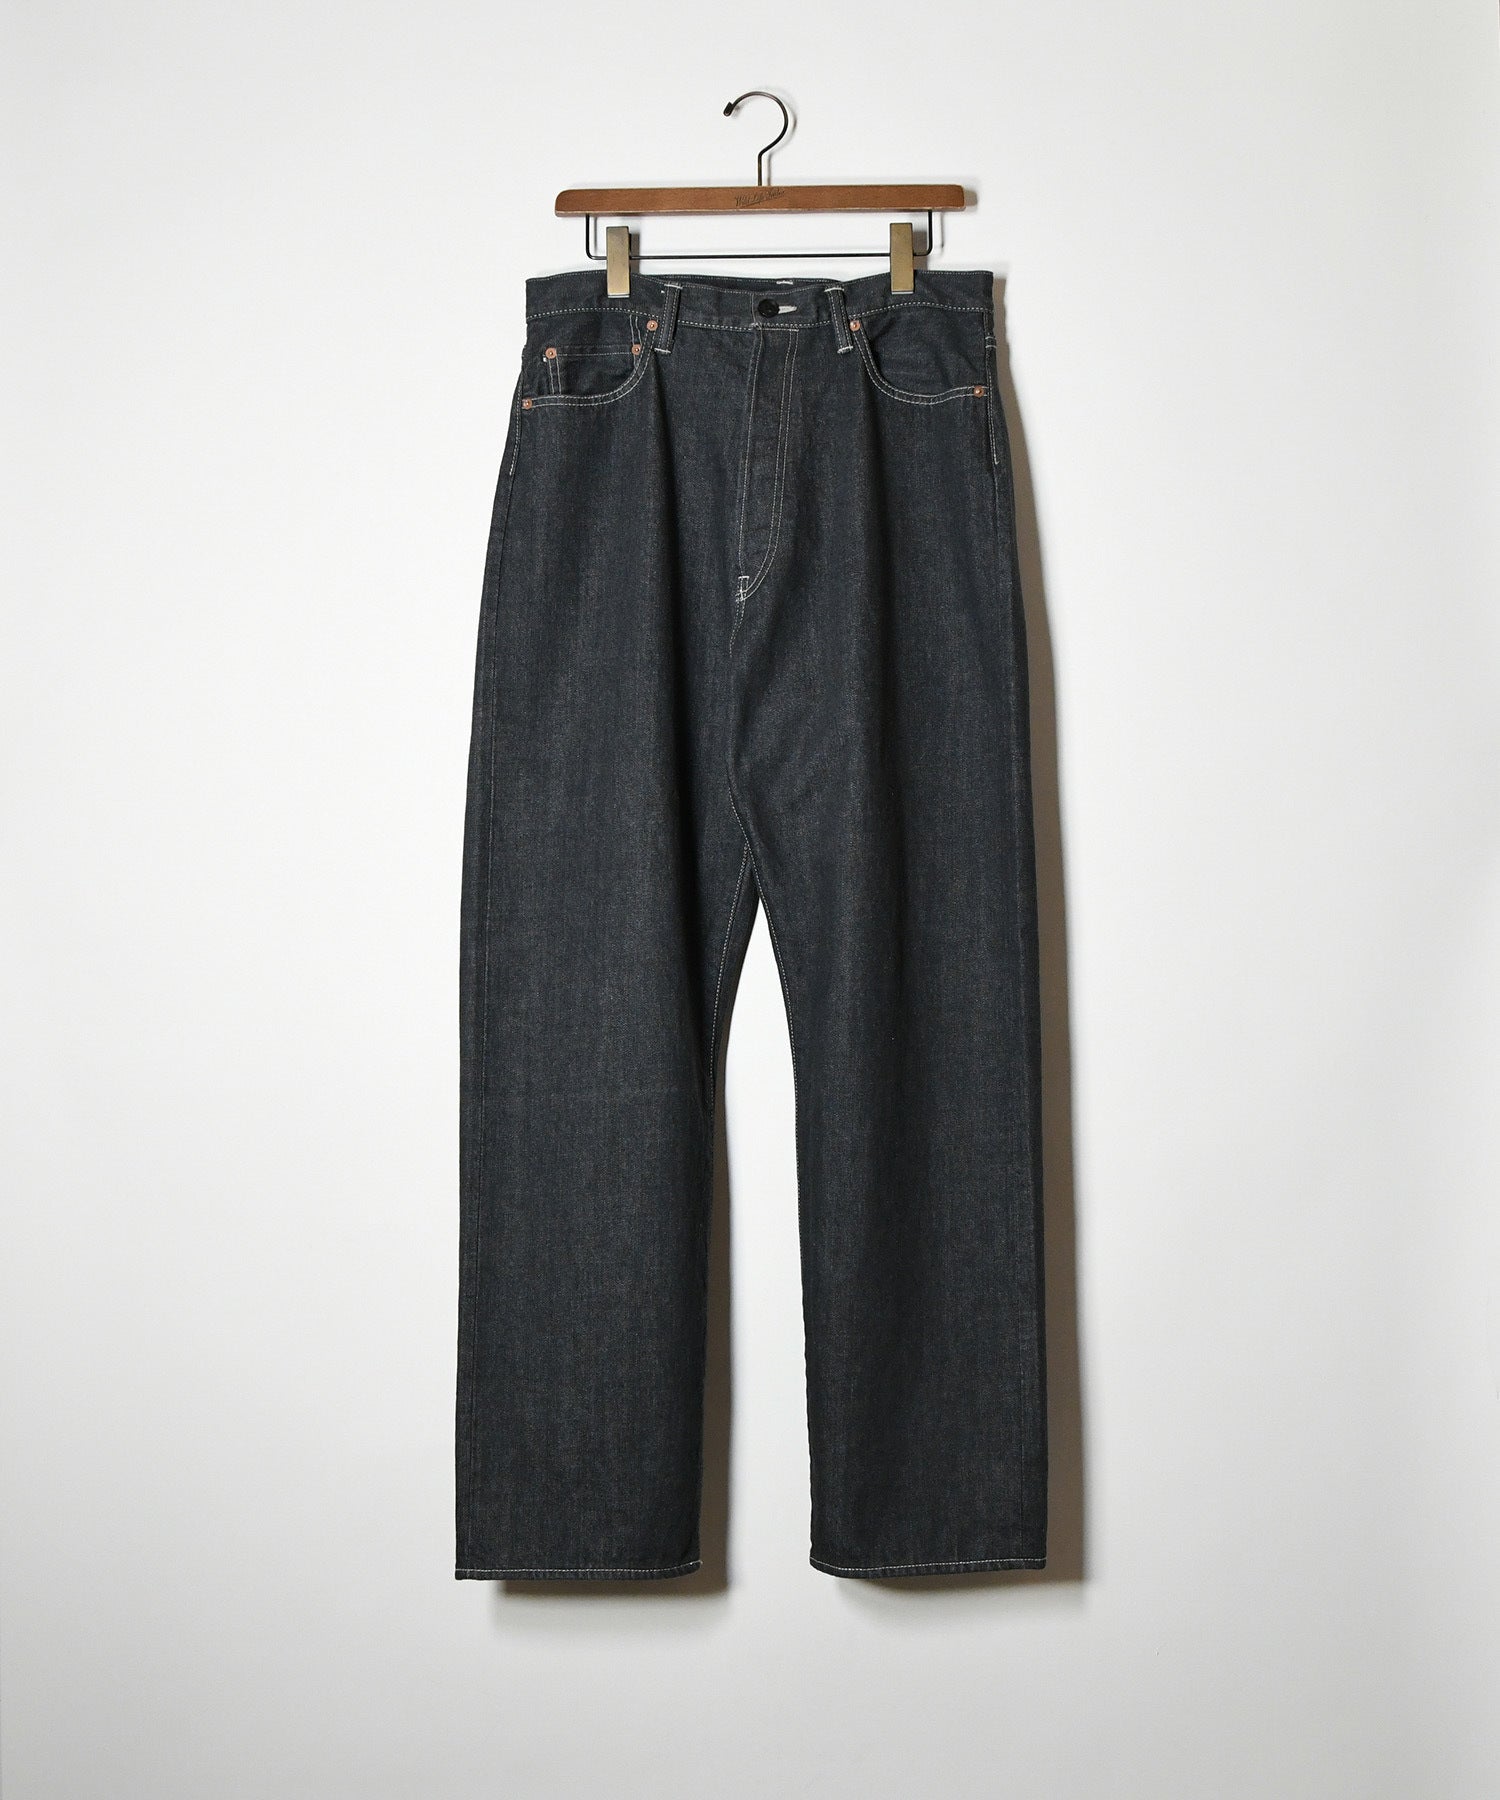 Denim 1955 Trousers CANTÁTE カンタータデニム23AW30000円でどうでしょうか